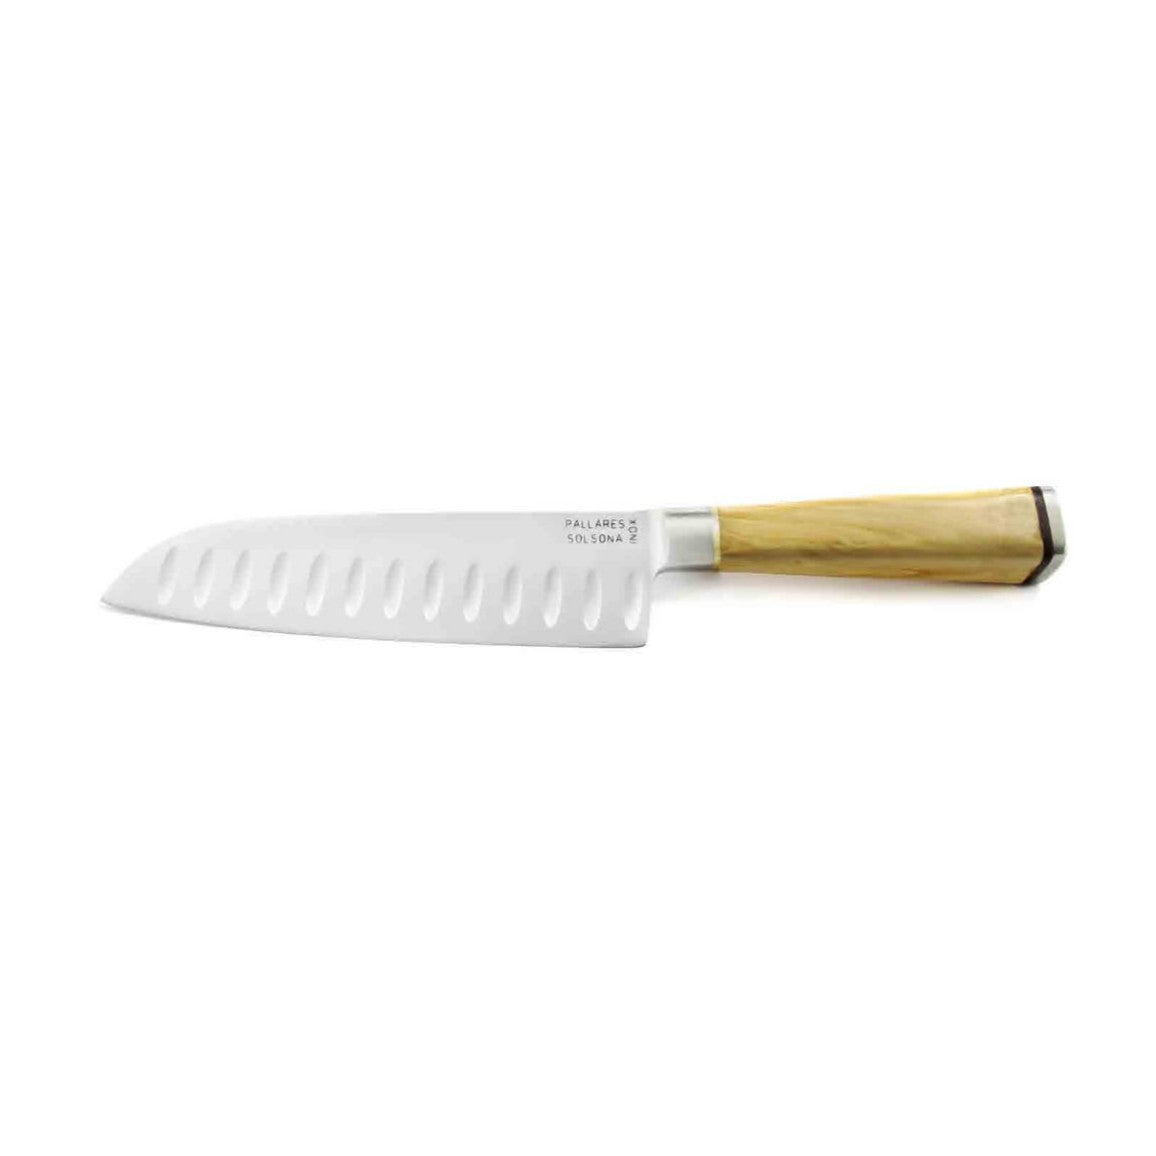 Santoku Knife Boxwood Handle 17cm Stainless Steel